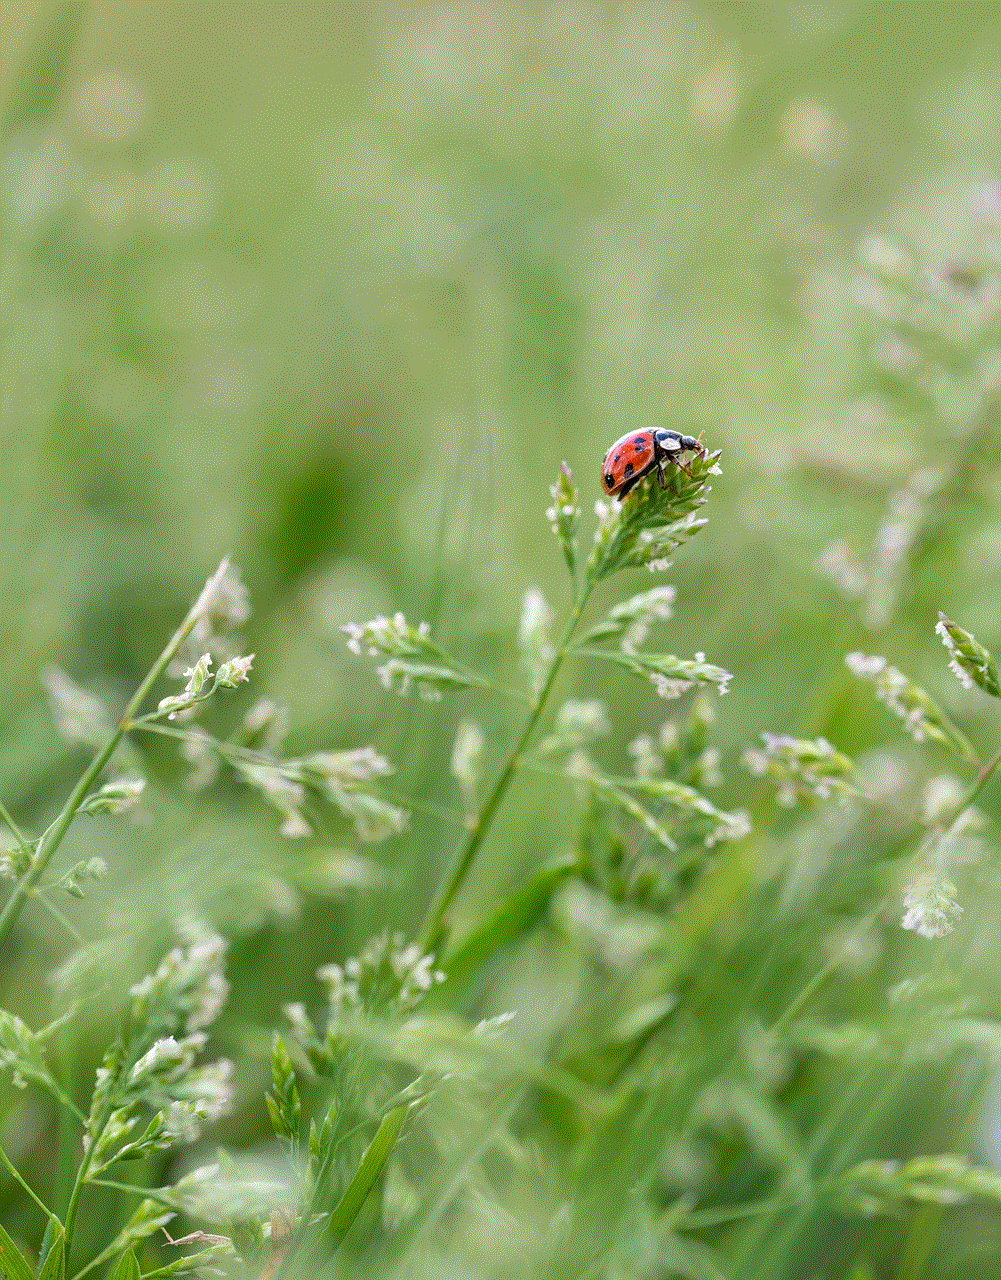 Small Ladybug